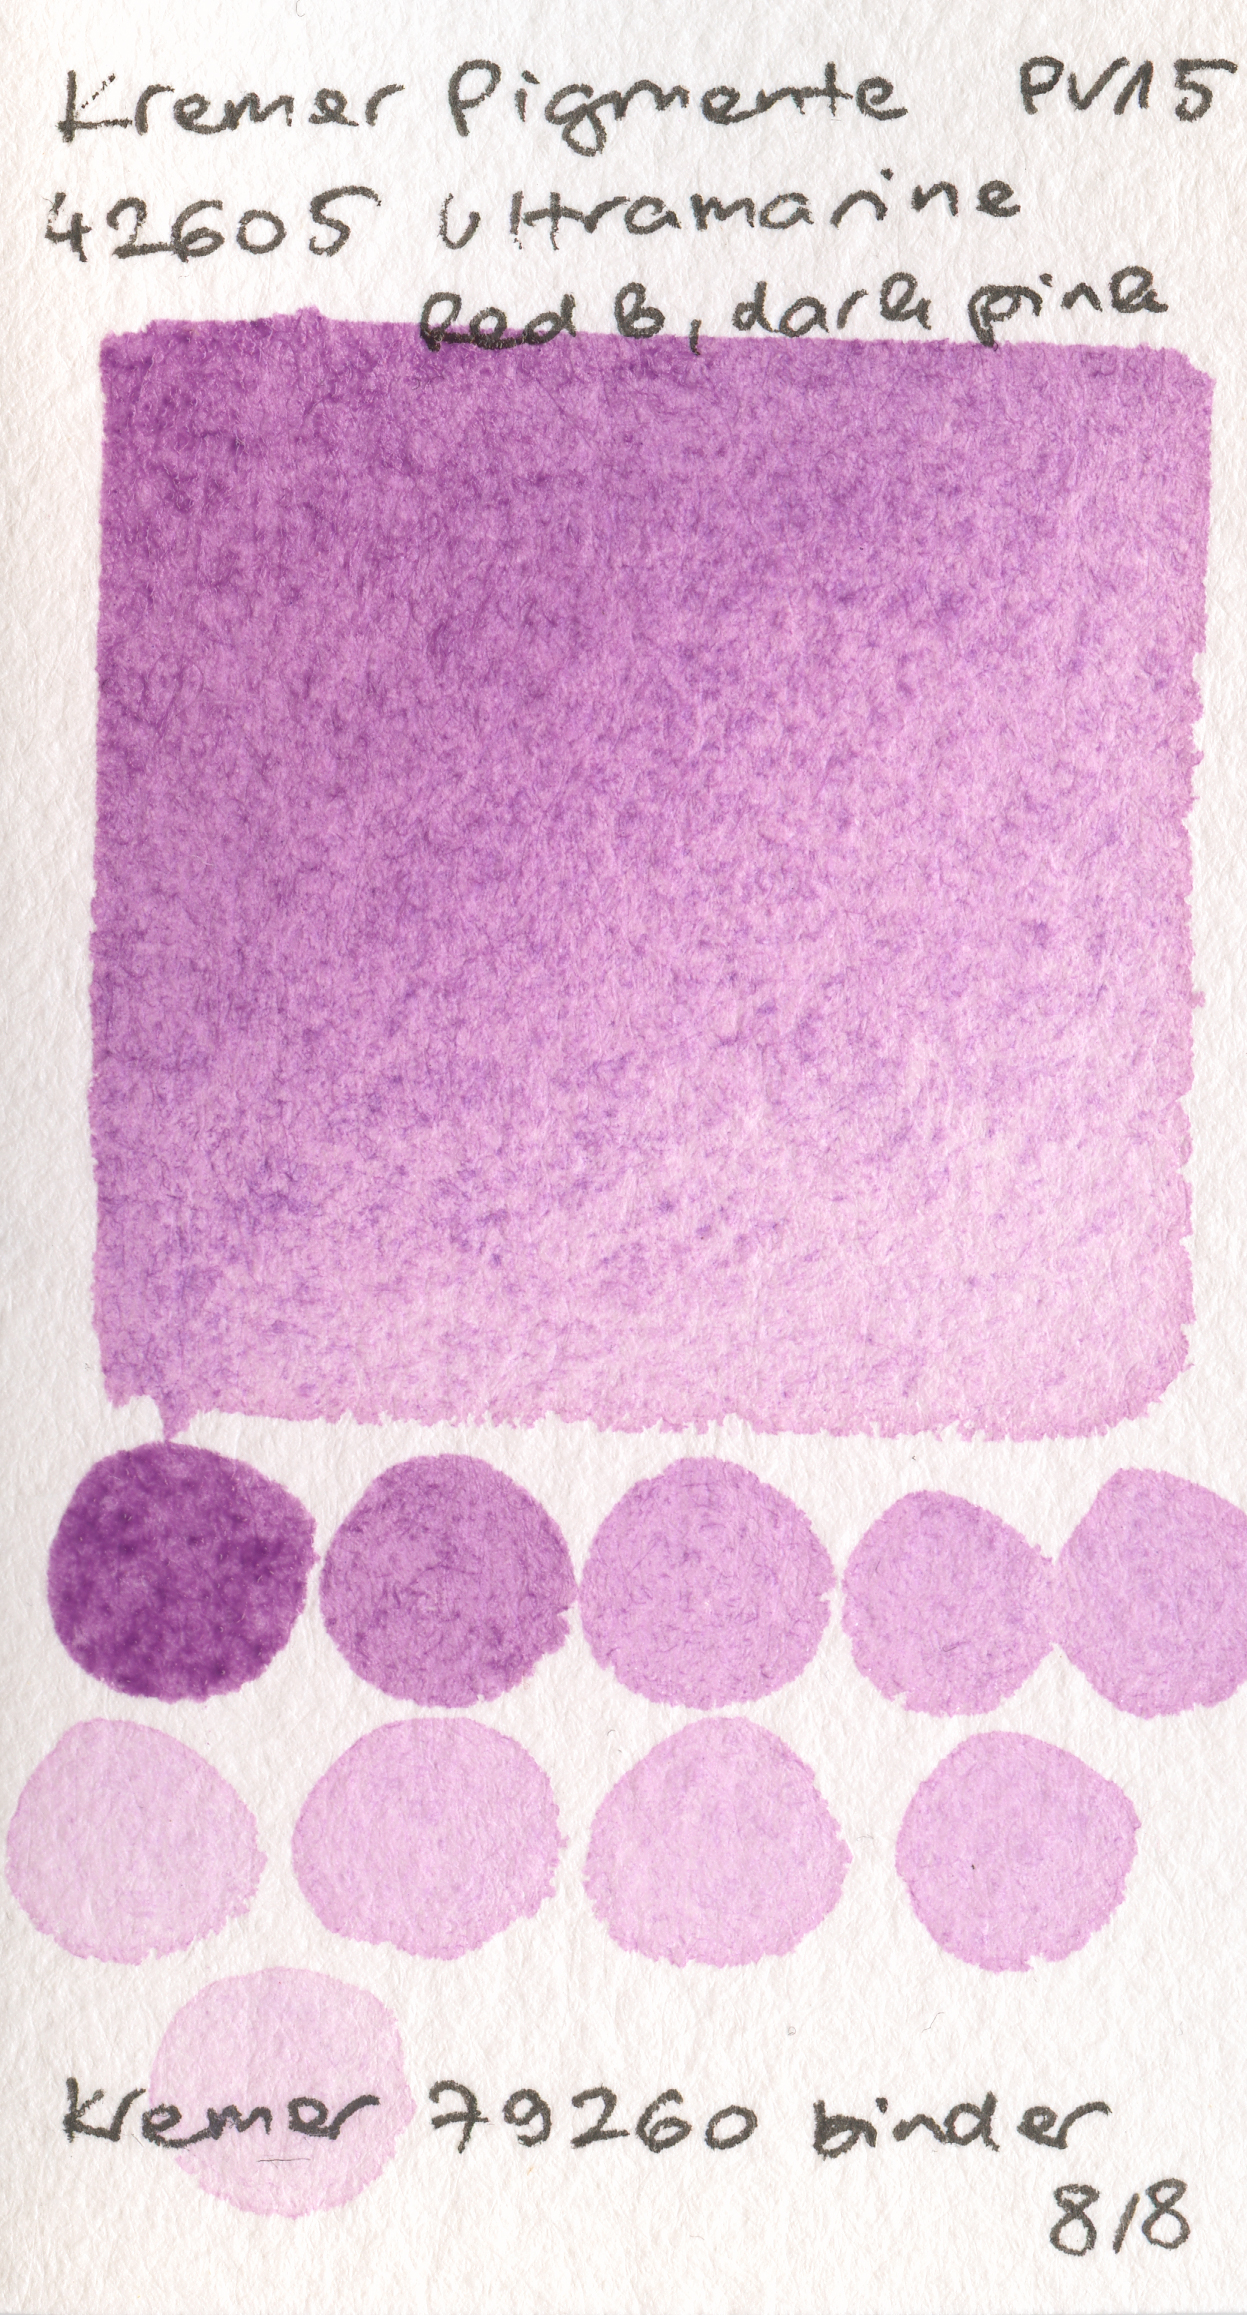 Kremer Pigmente [Dry] Pigments 42605 Ultramarine Red B, dark pink PV15 watercolor swatch